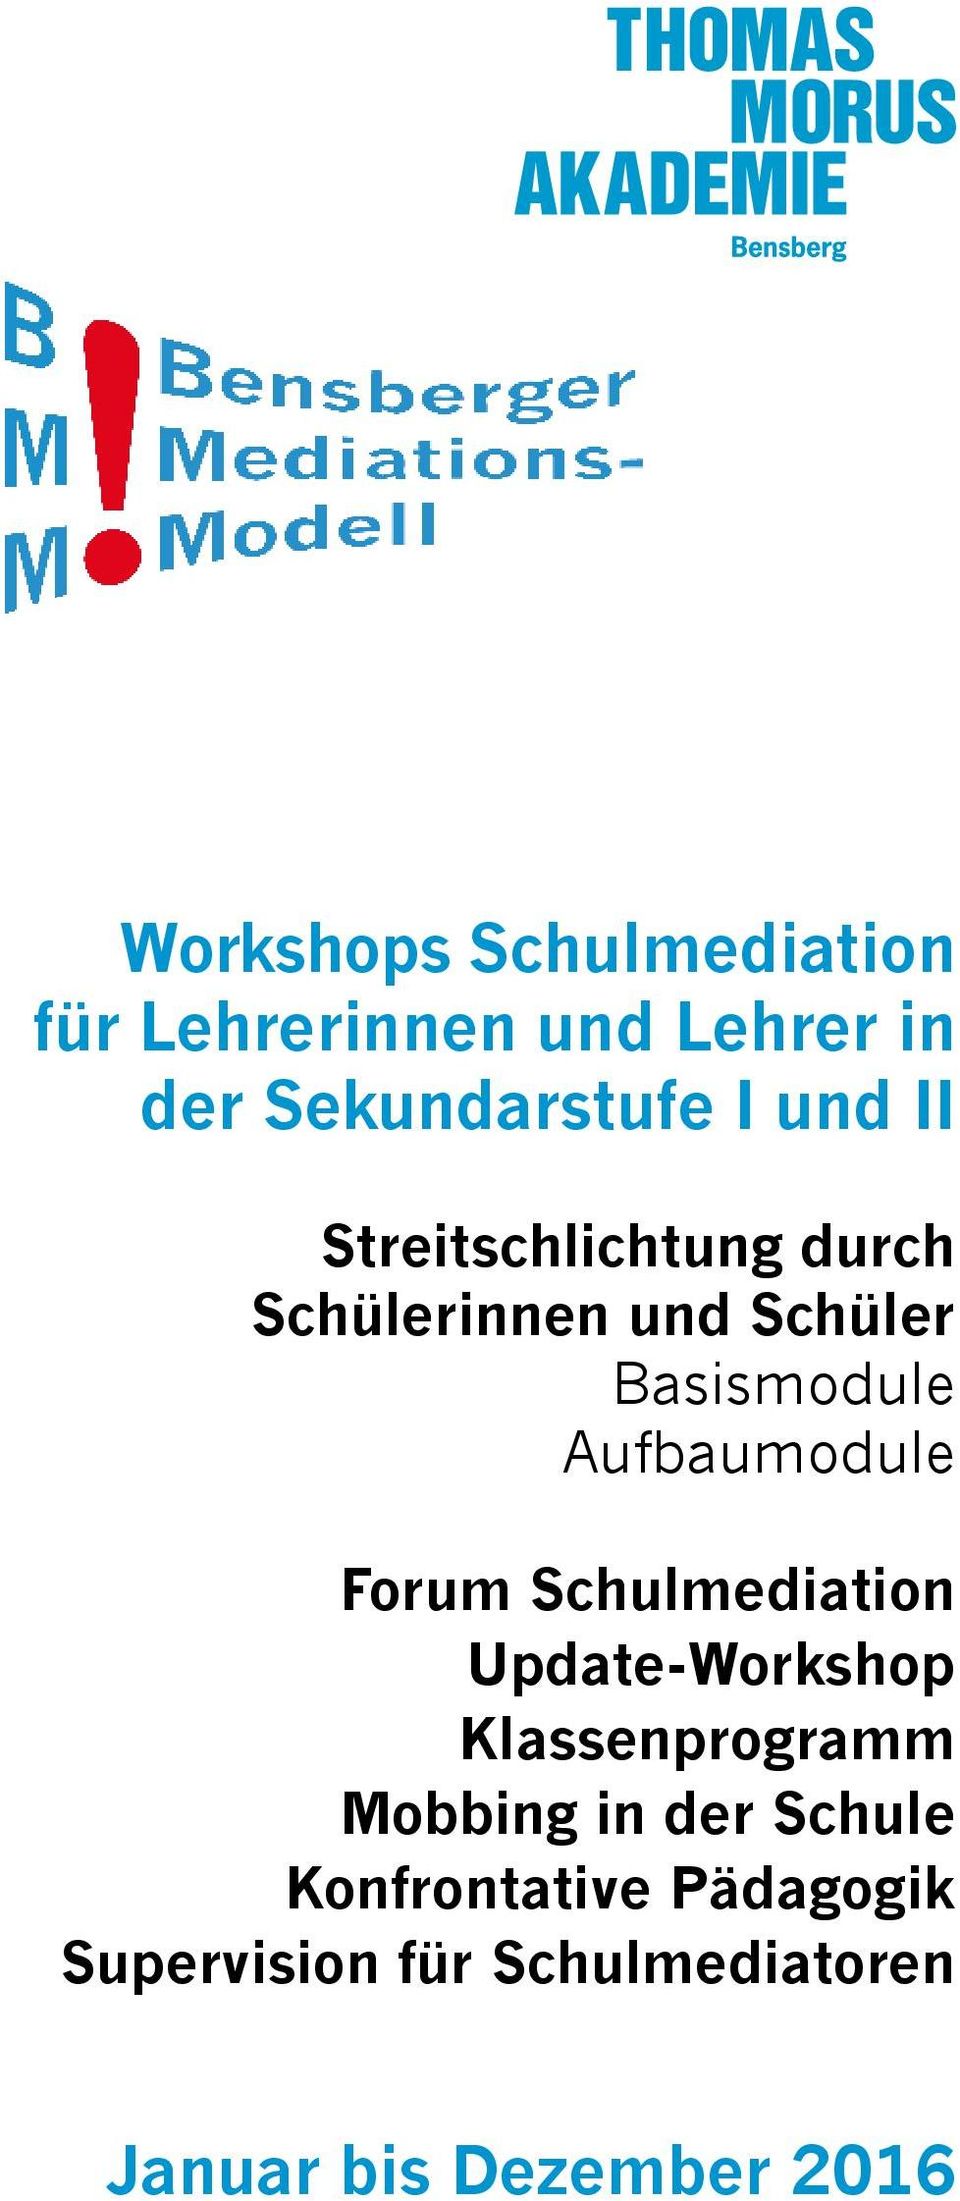 Aufbaumodule Forum Schulmediation Update-Workshop Klassenprogramm Mobbing in